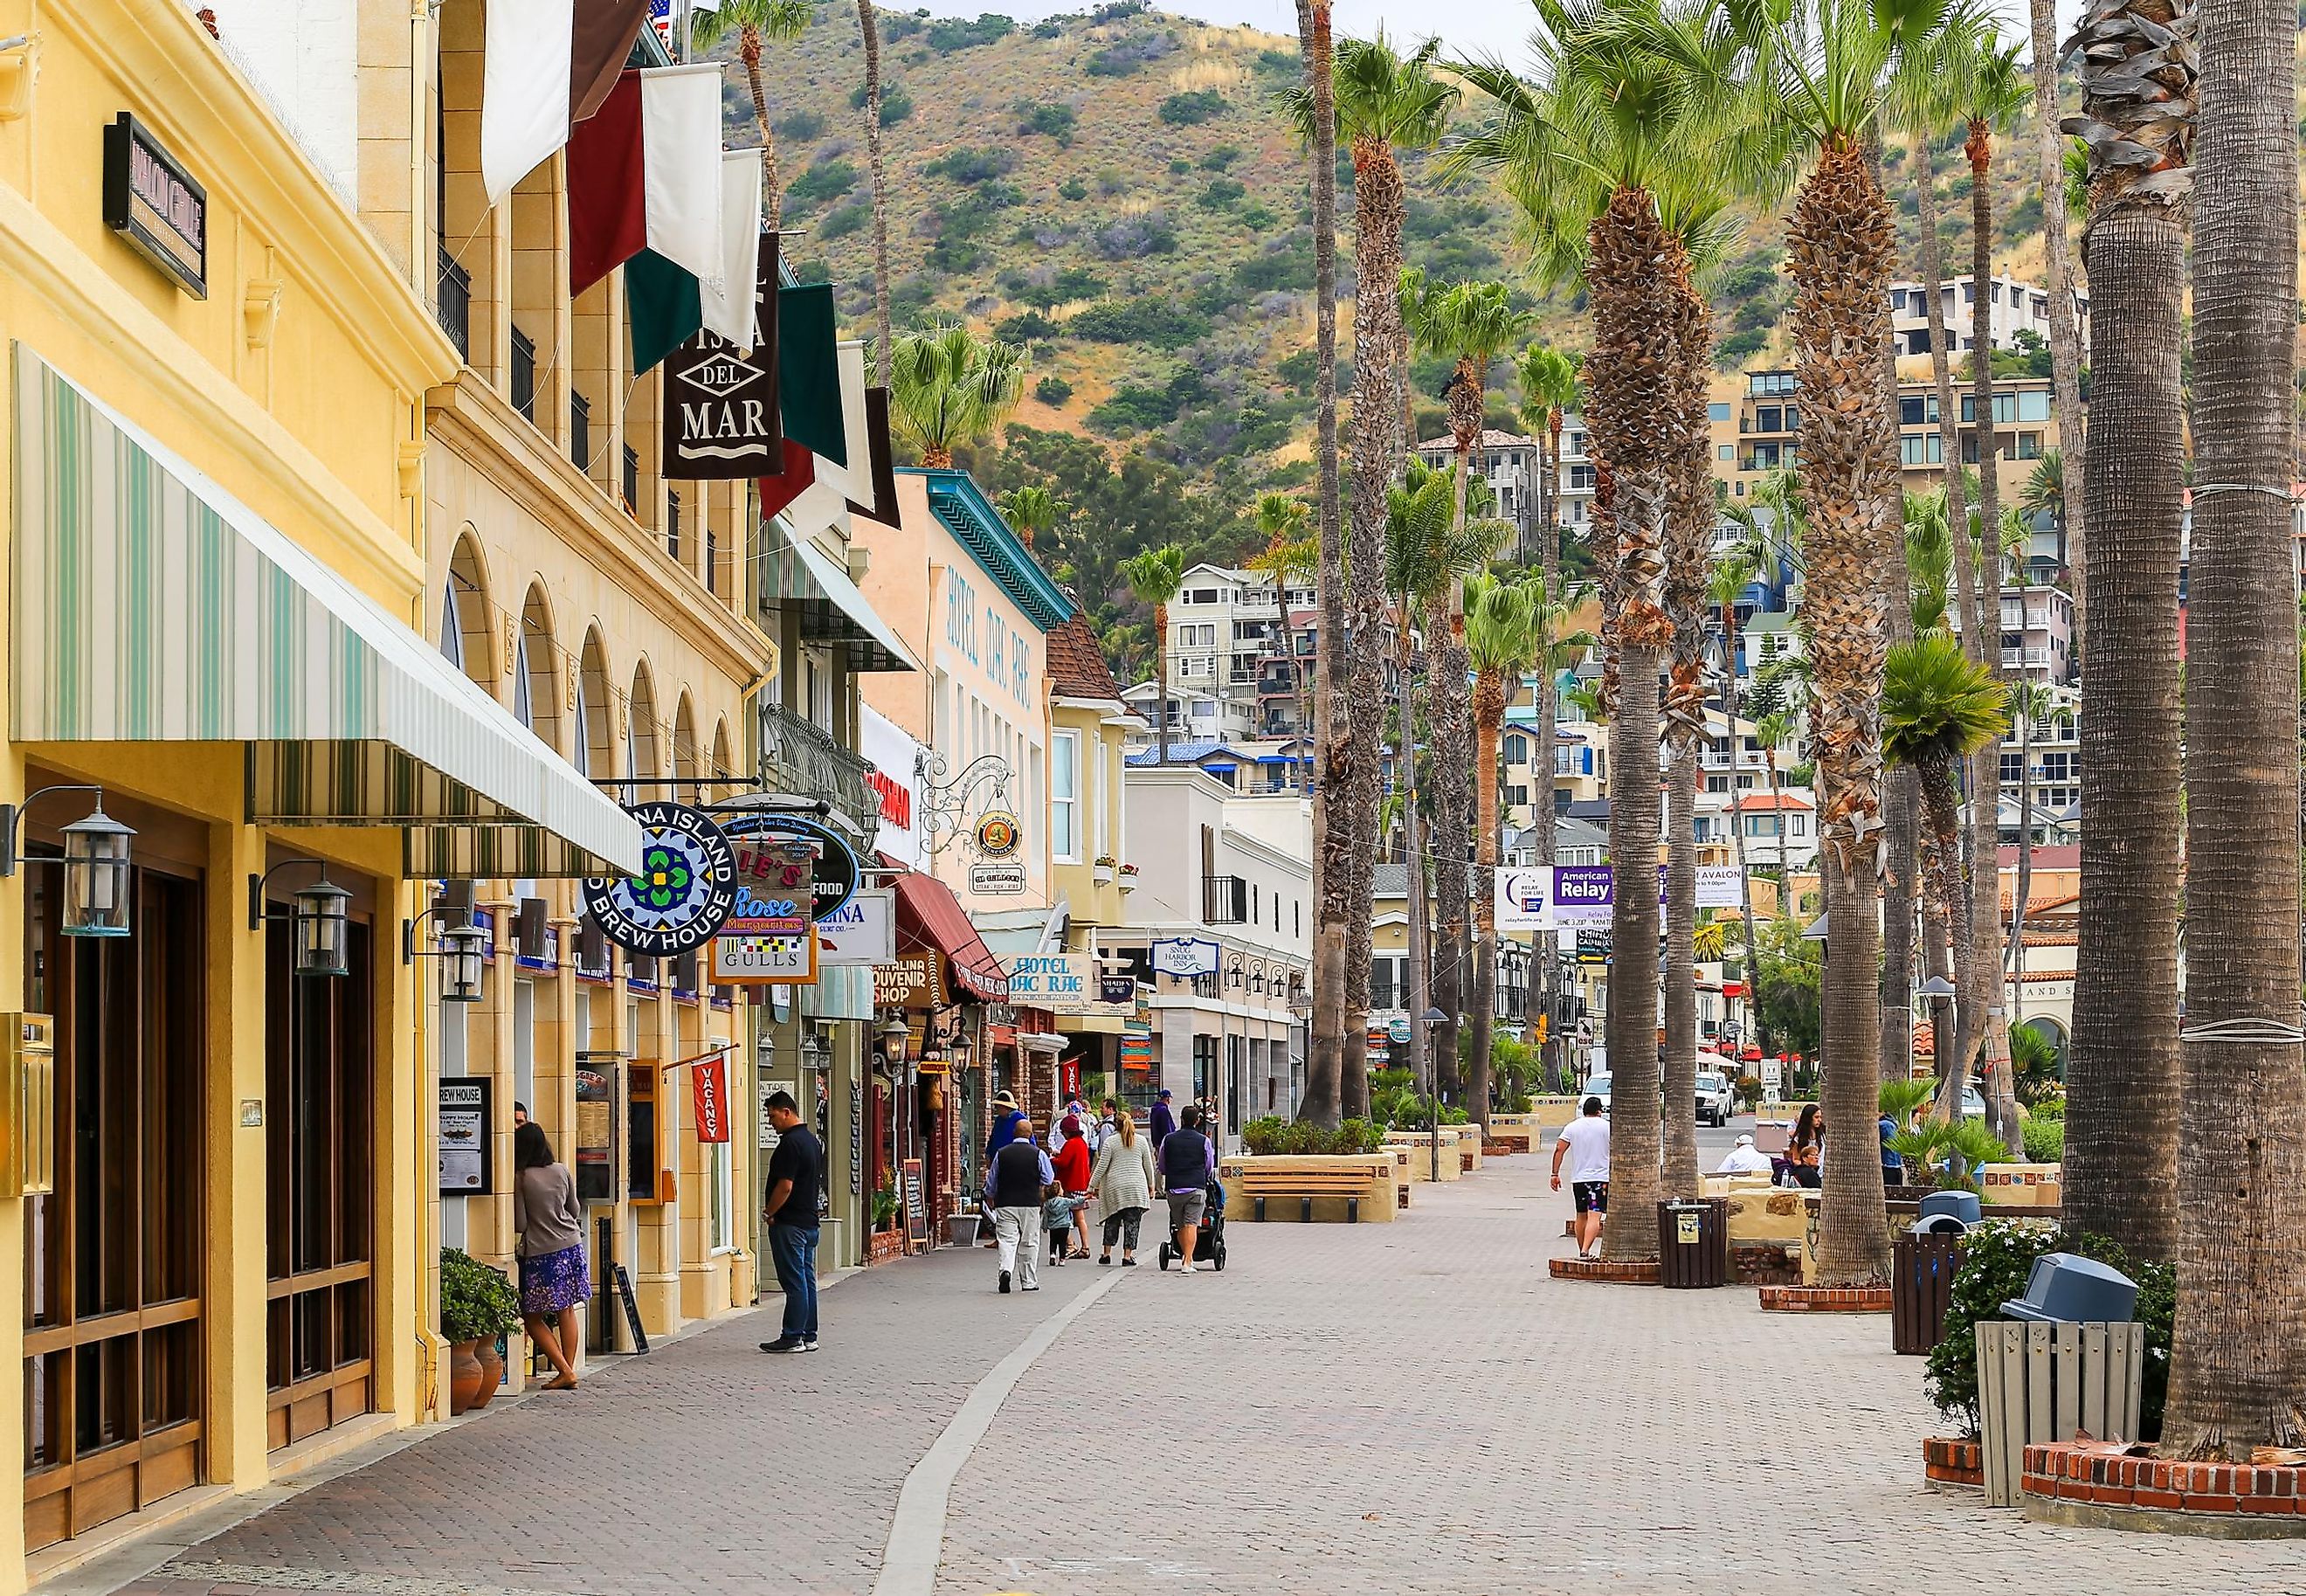 The boardwalk in Avalon (Santa Catalina Island) with shops on the left, via Michael Rosebrock / Shutterstock.com